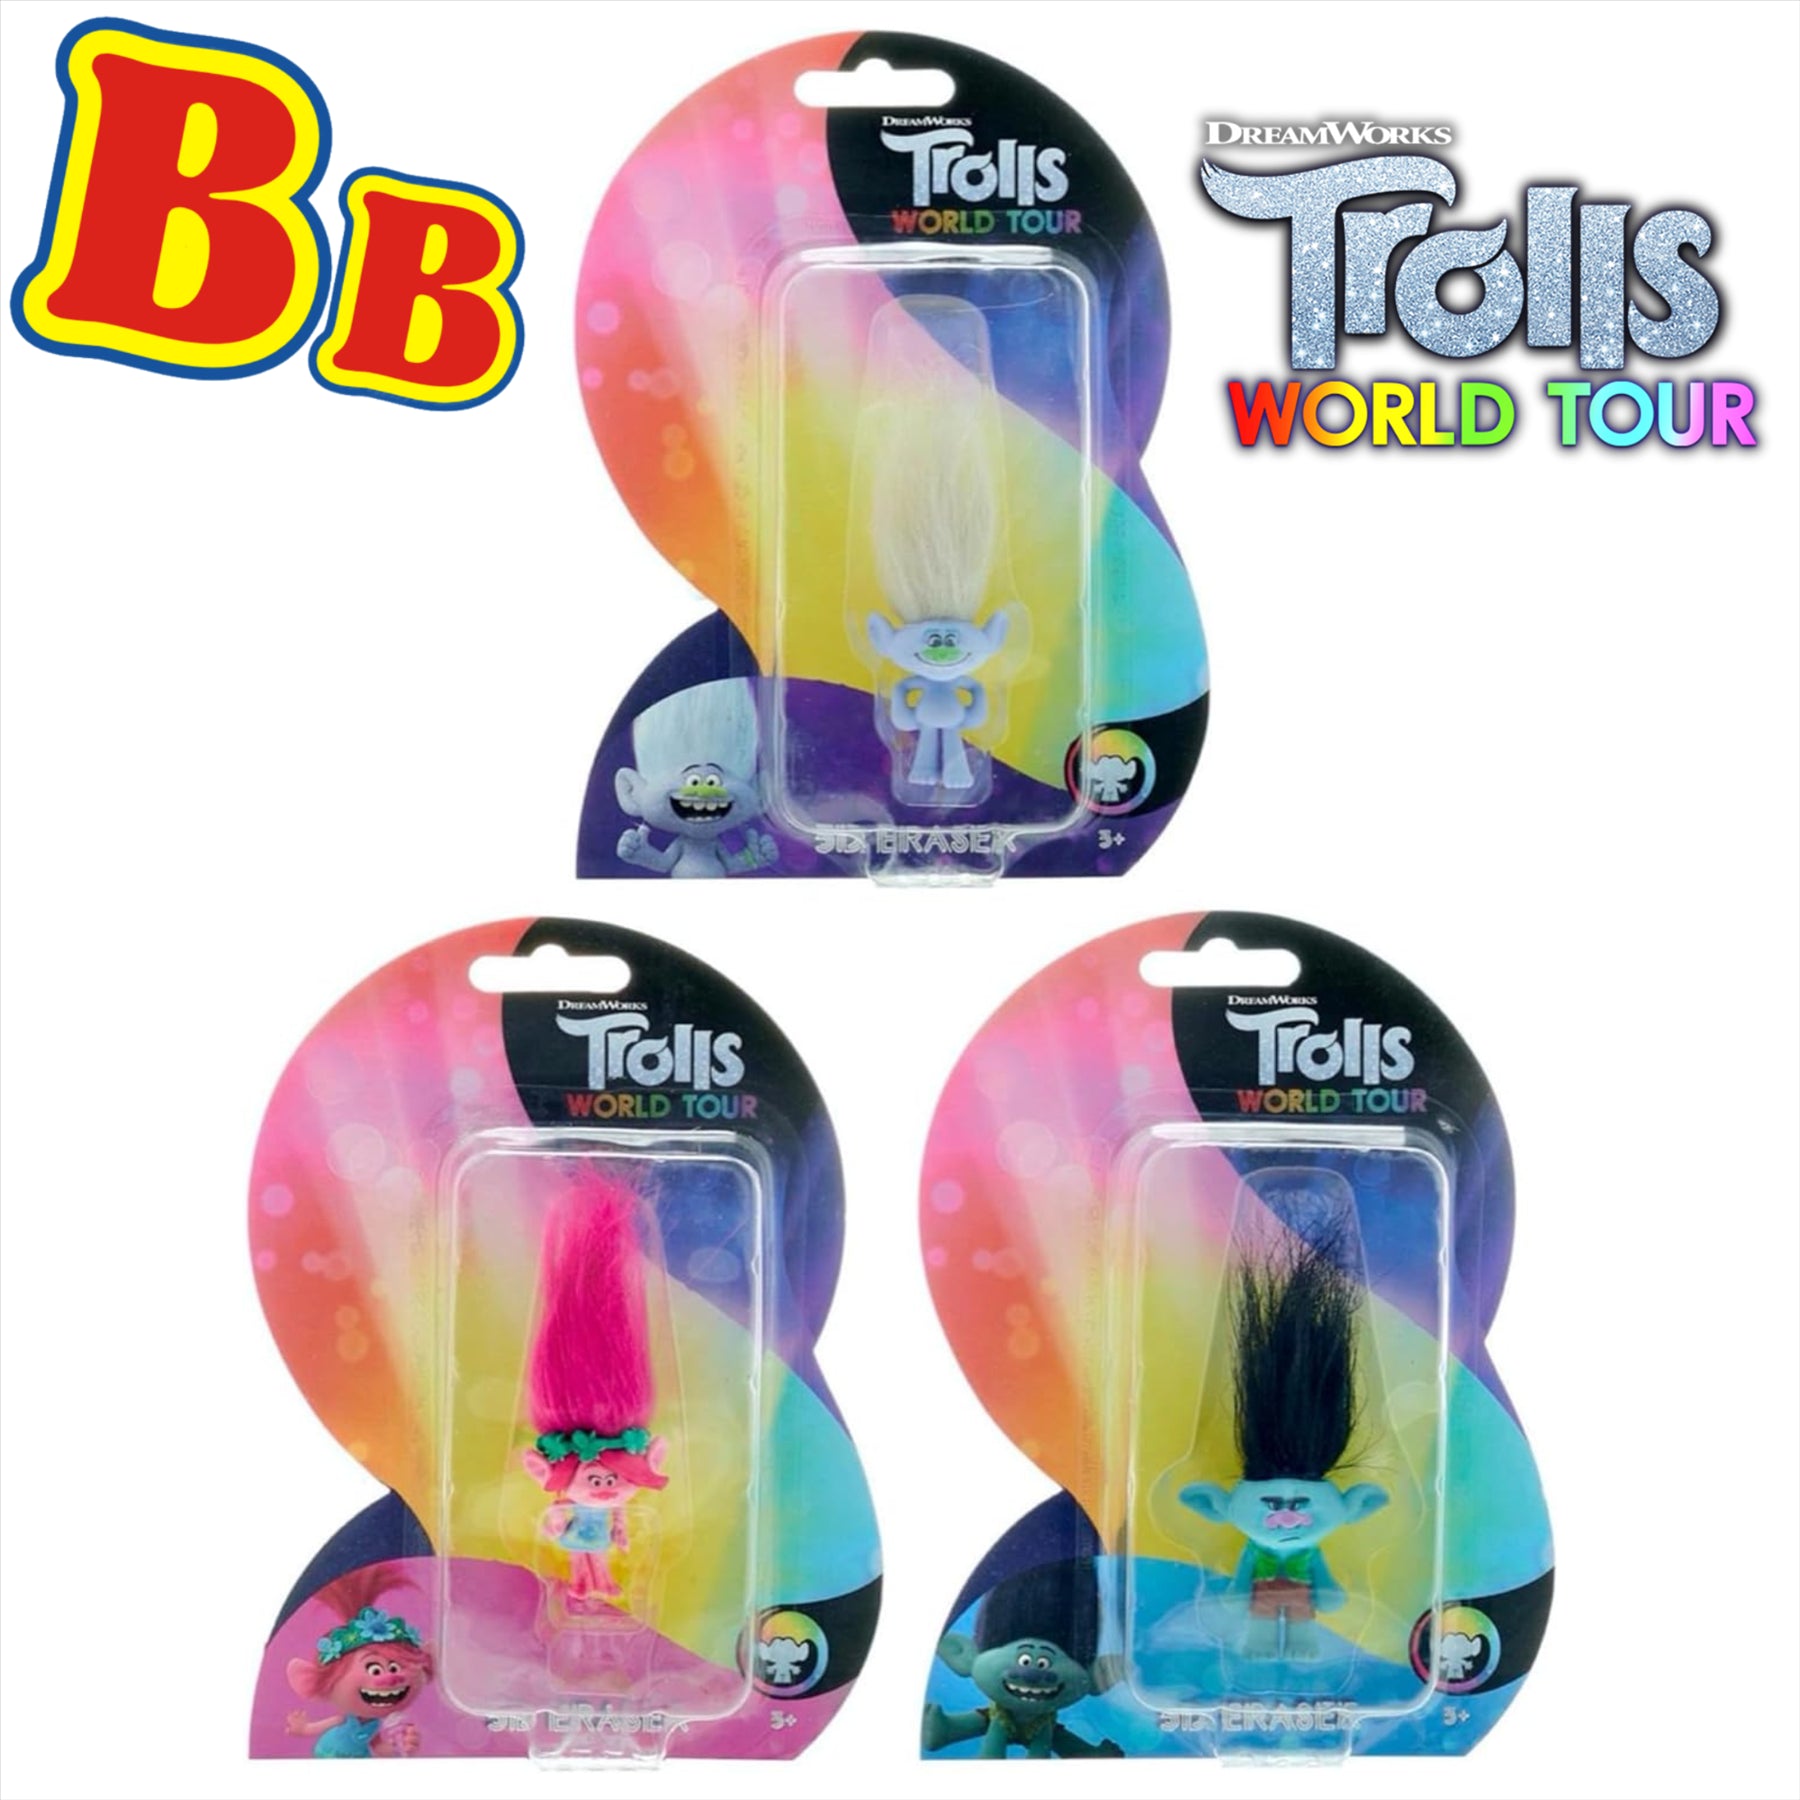 Trolls 3D Rubber Eraser Stationery Set Pack of 3 - Poppy, Branch, and Guy Diamond - Toptoys2u